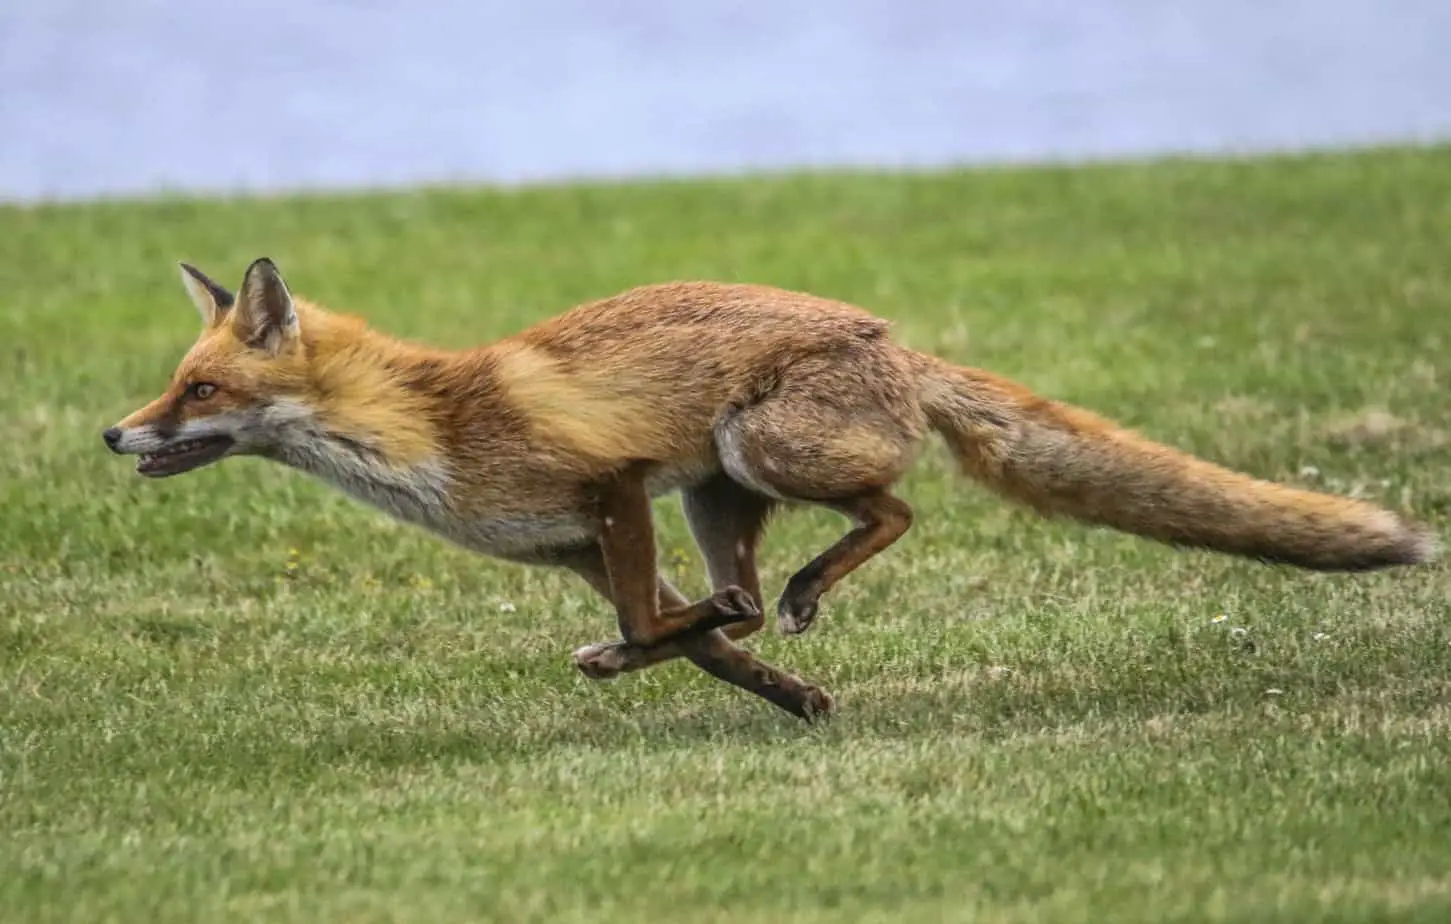 Galloping fox
Diurnal fox
Nocturnal fox